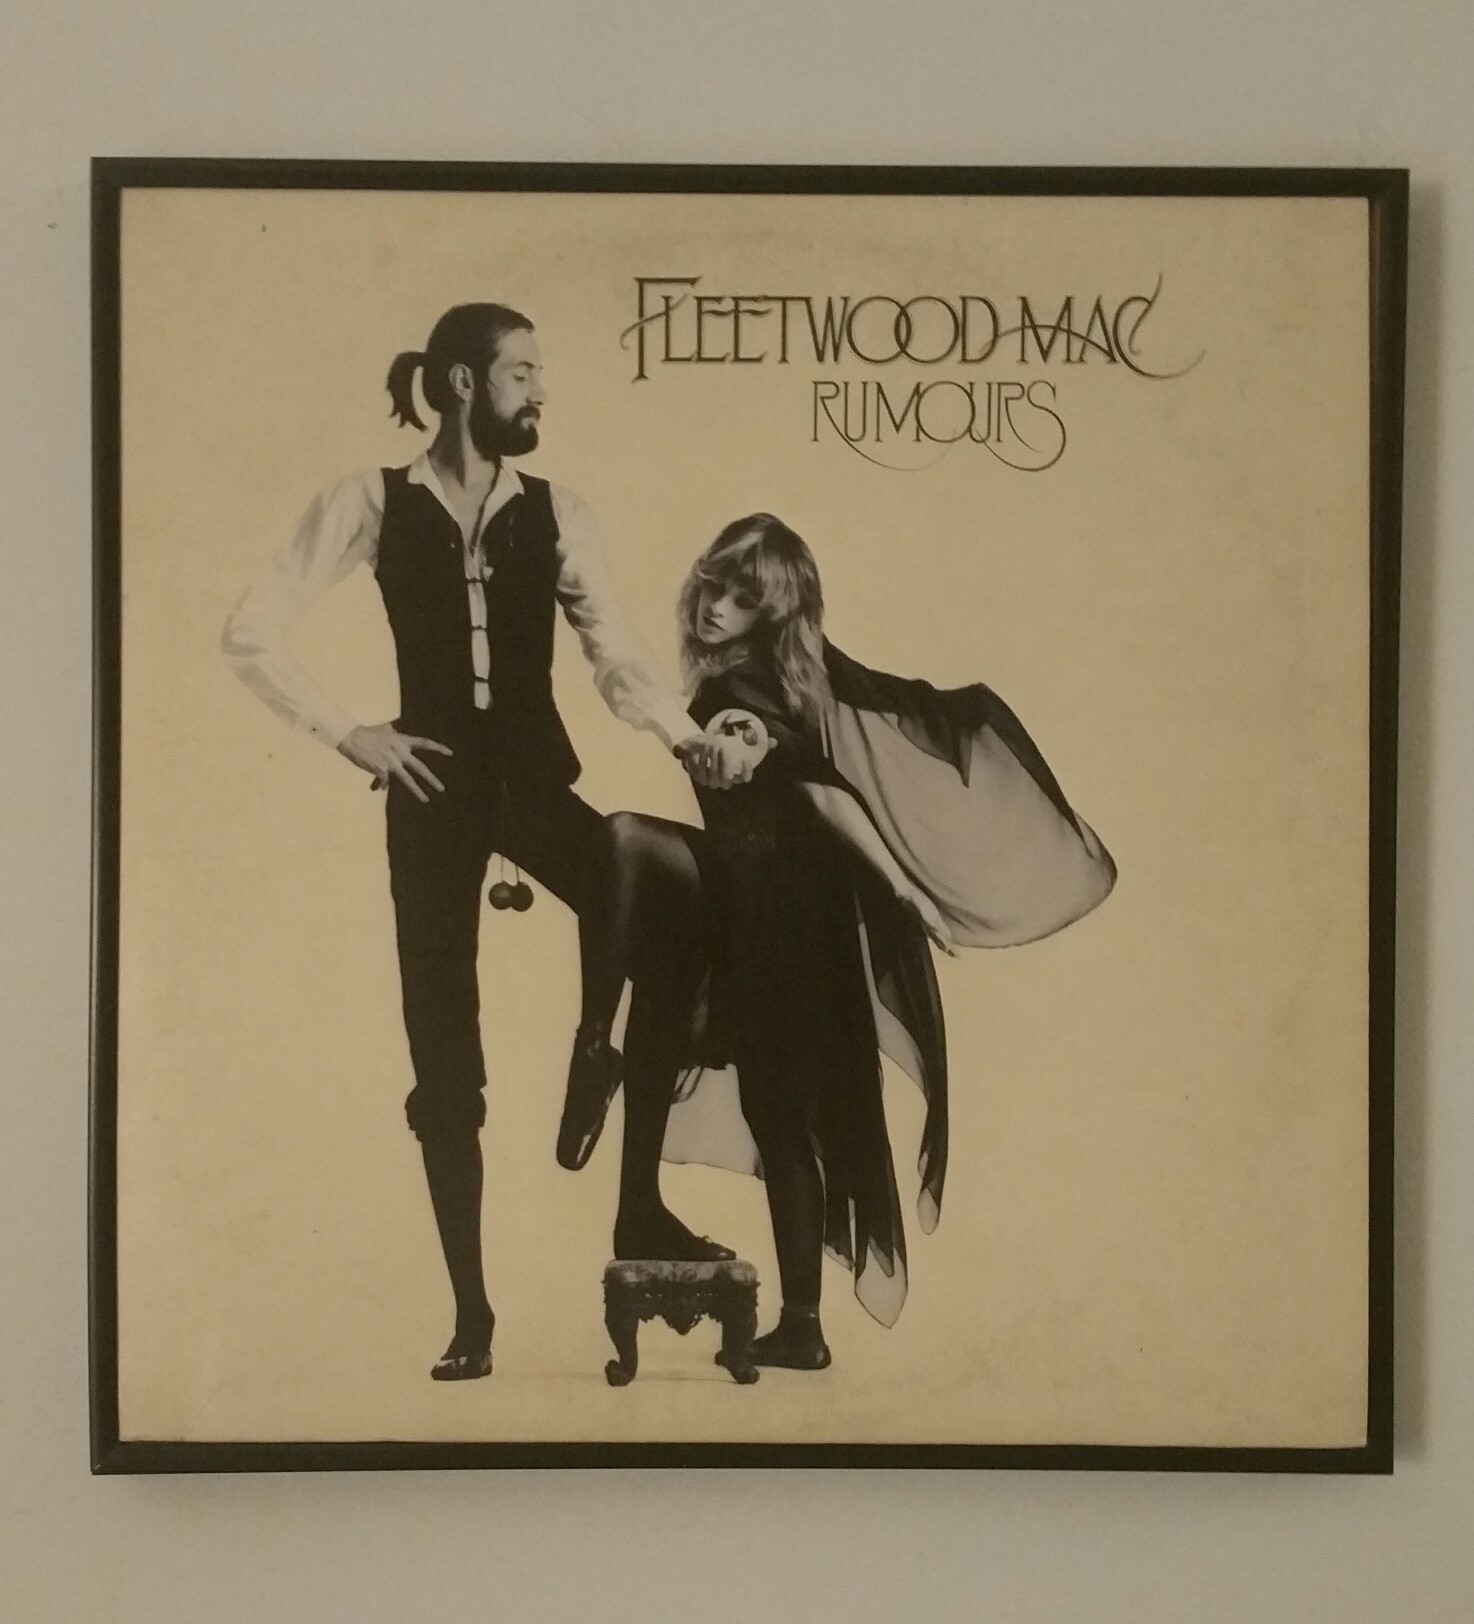 The Fleetwood Mac Rumours album from 1977 courtesy of vinyl record memories.com